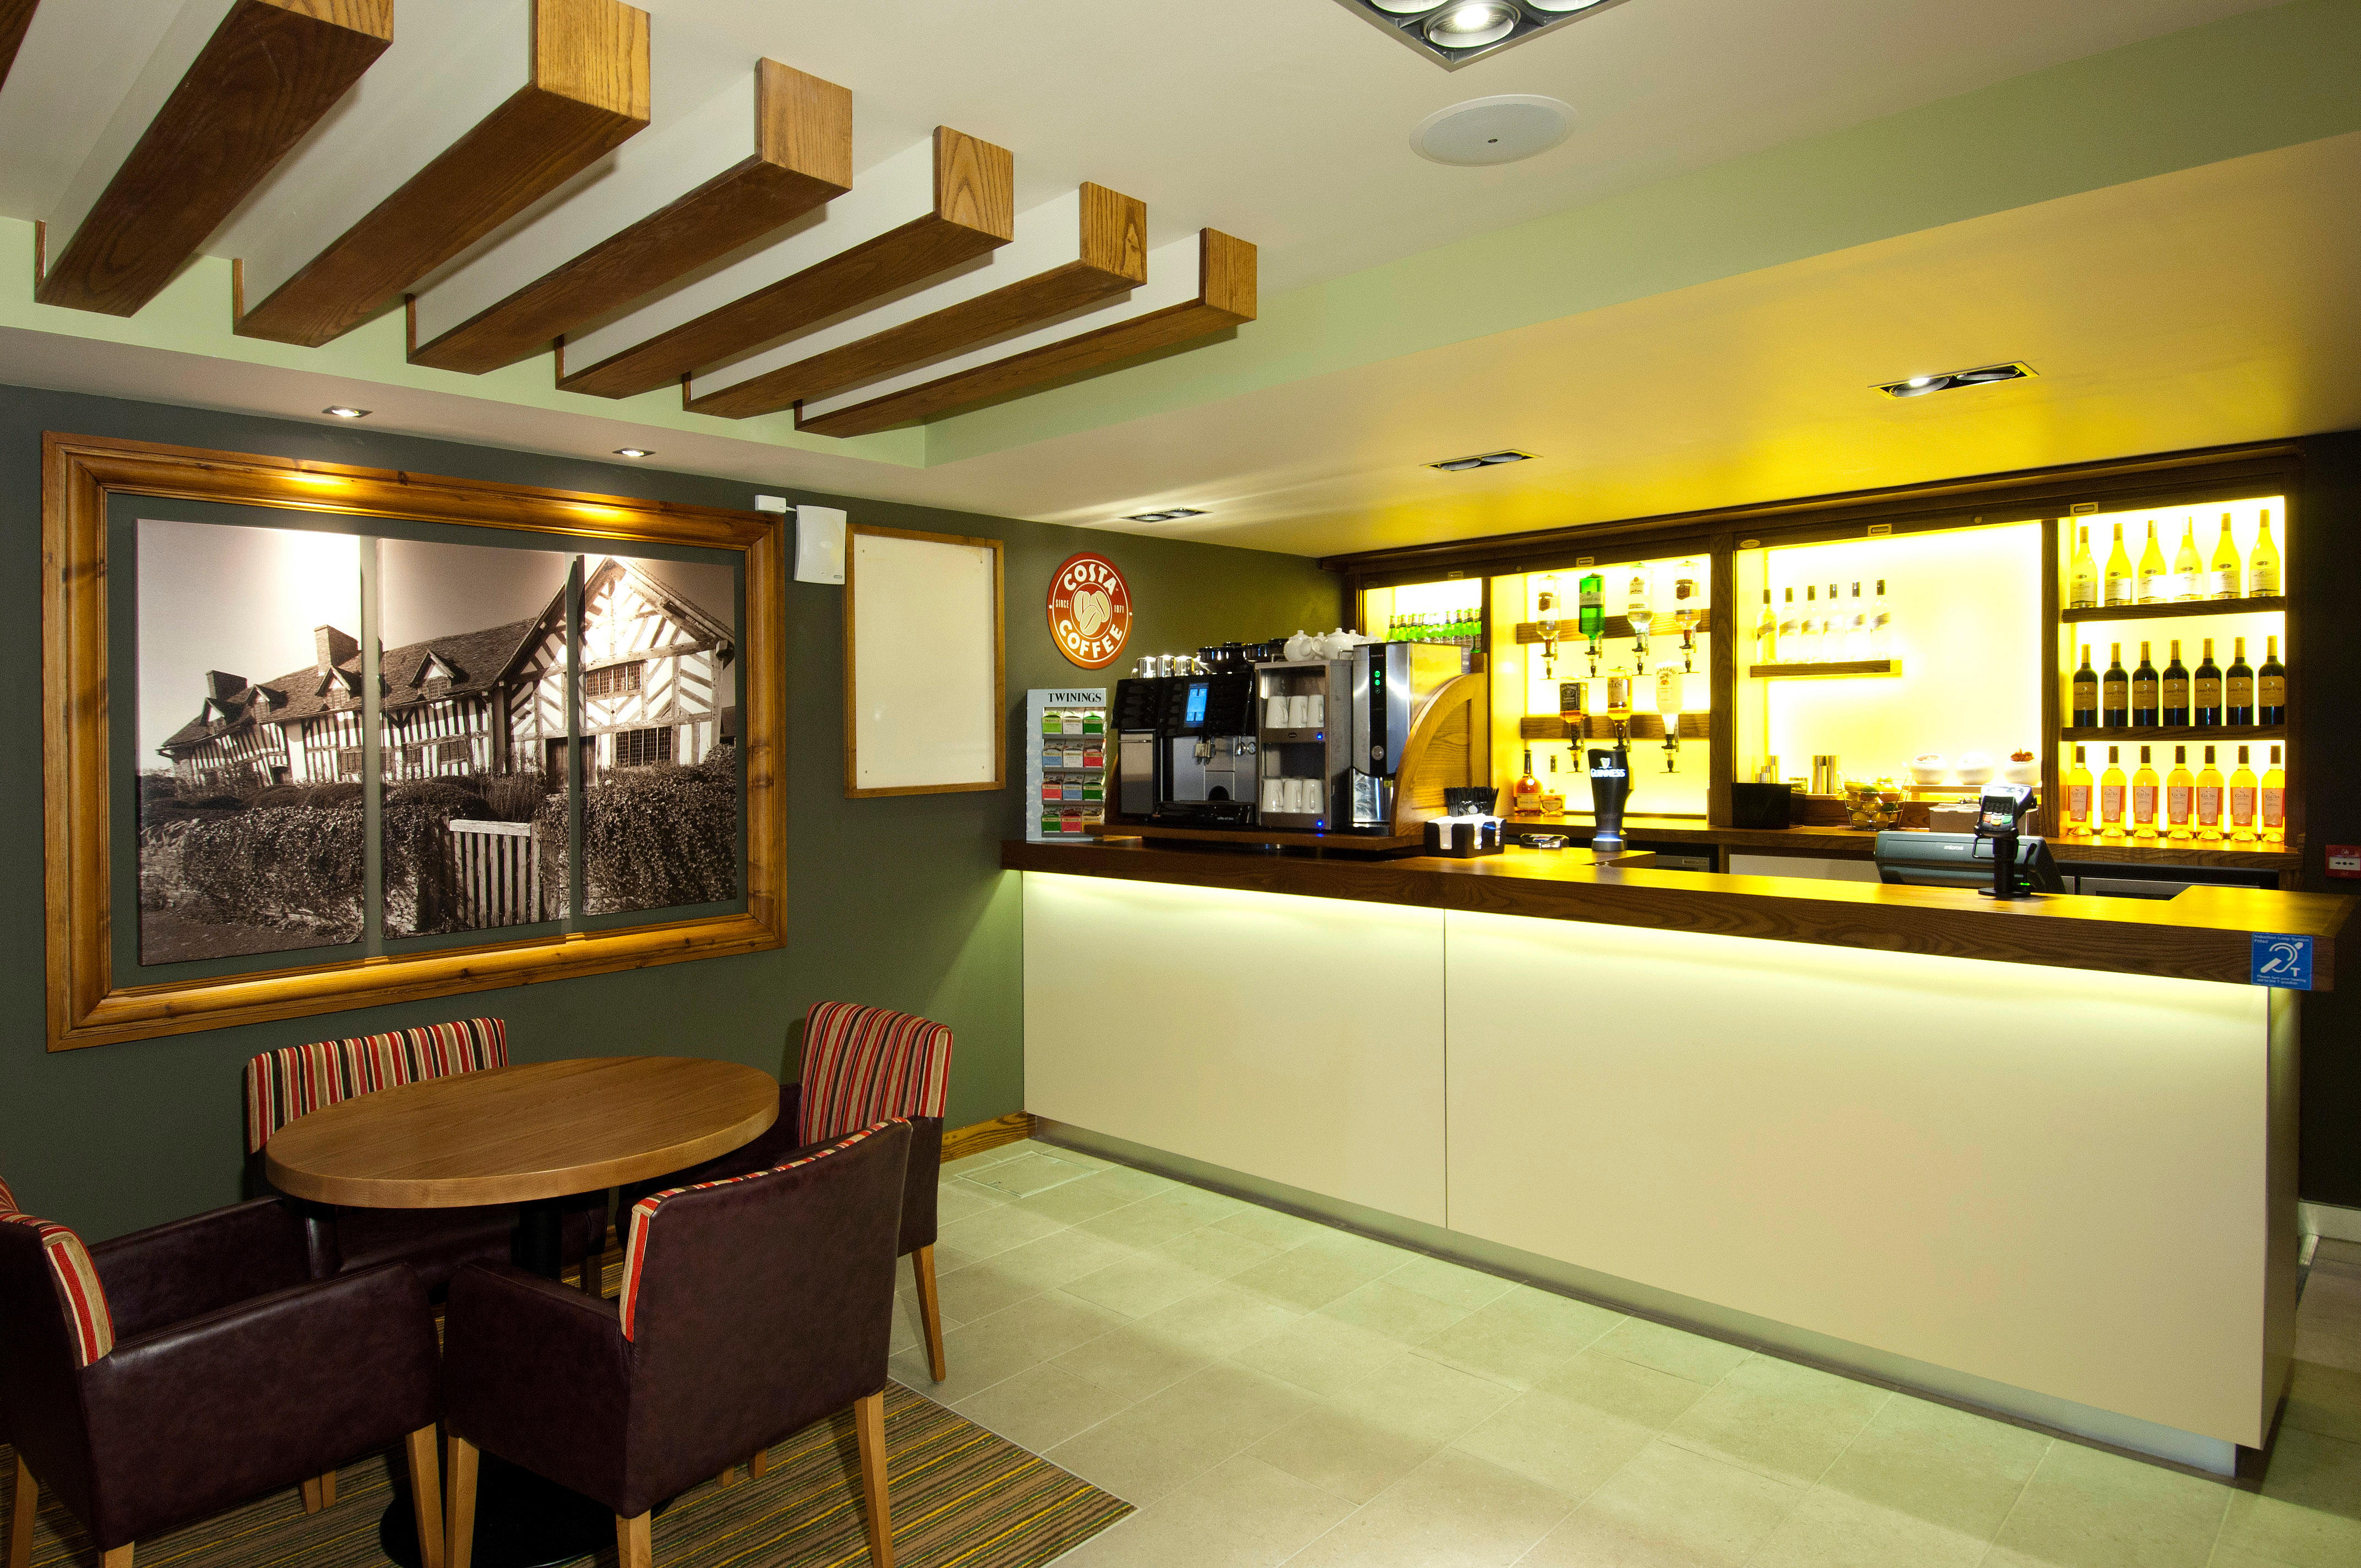 The Kitchen restaurant Premier Inn Stratford Upon Avon Central hotel Stratford-Upon-Avon 03333 219223